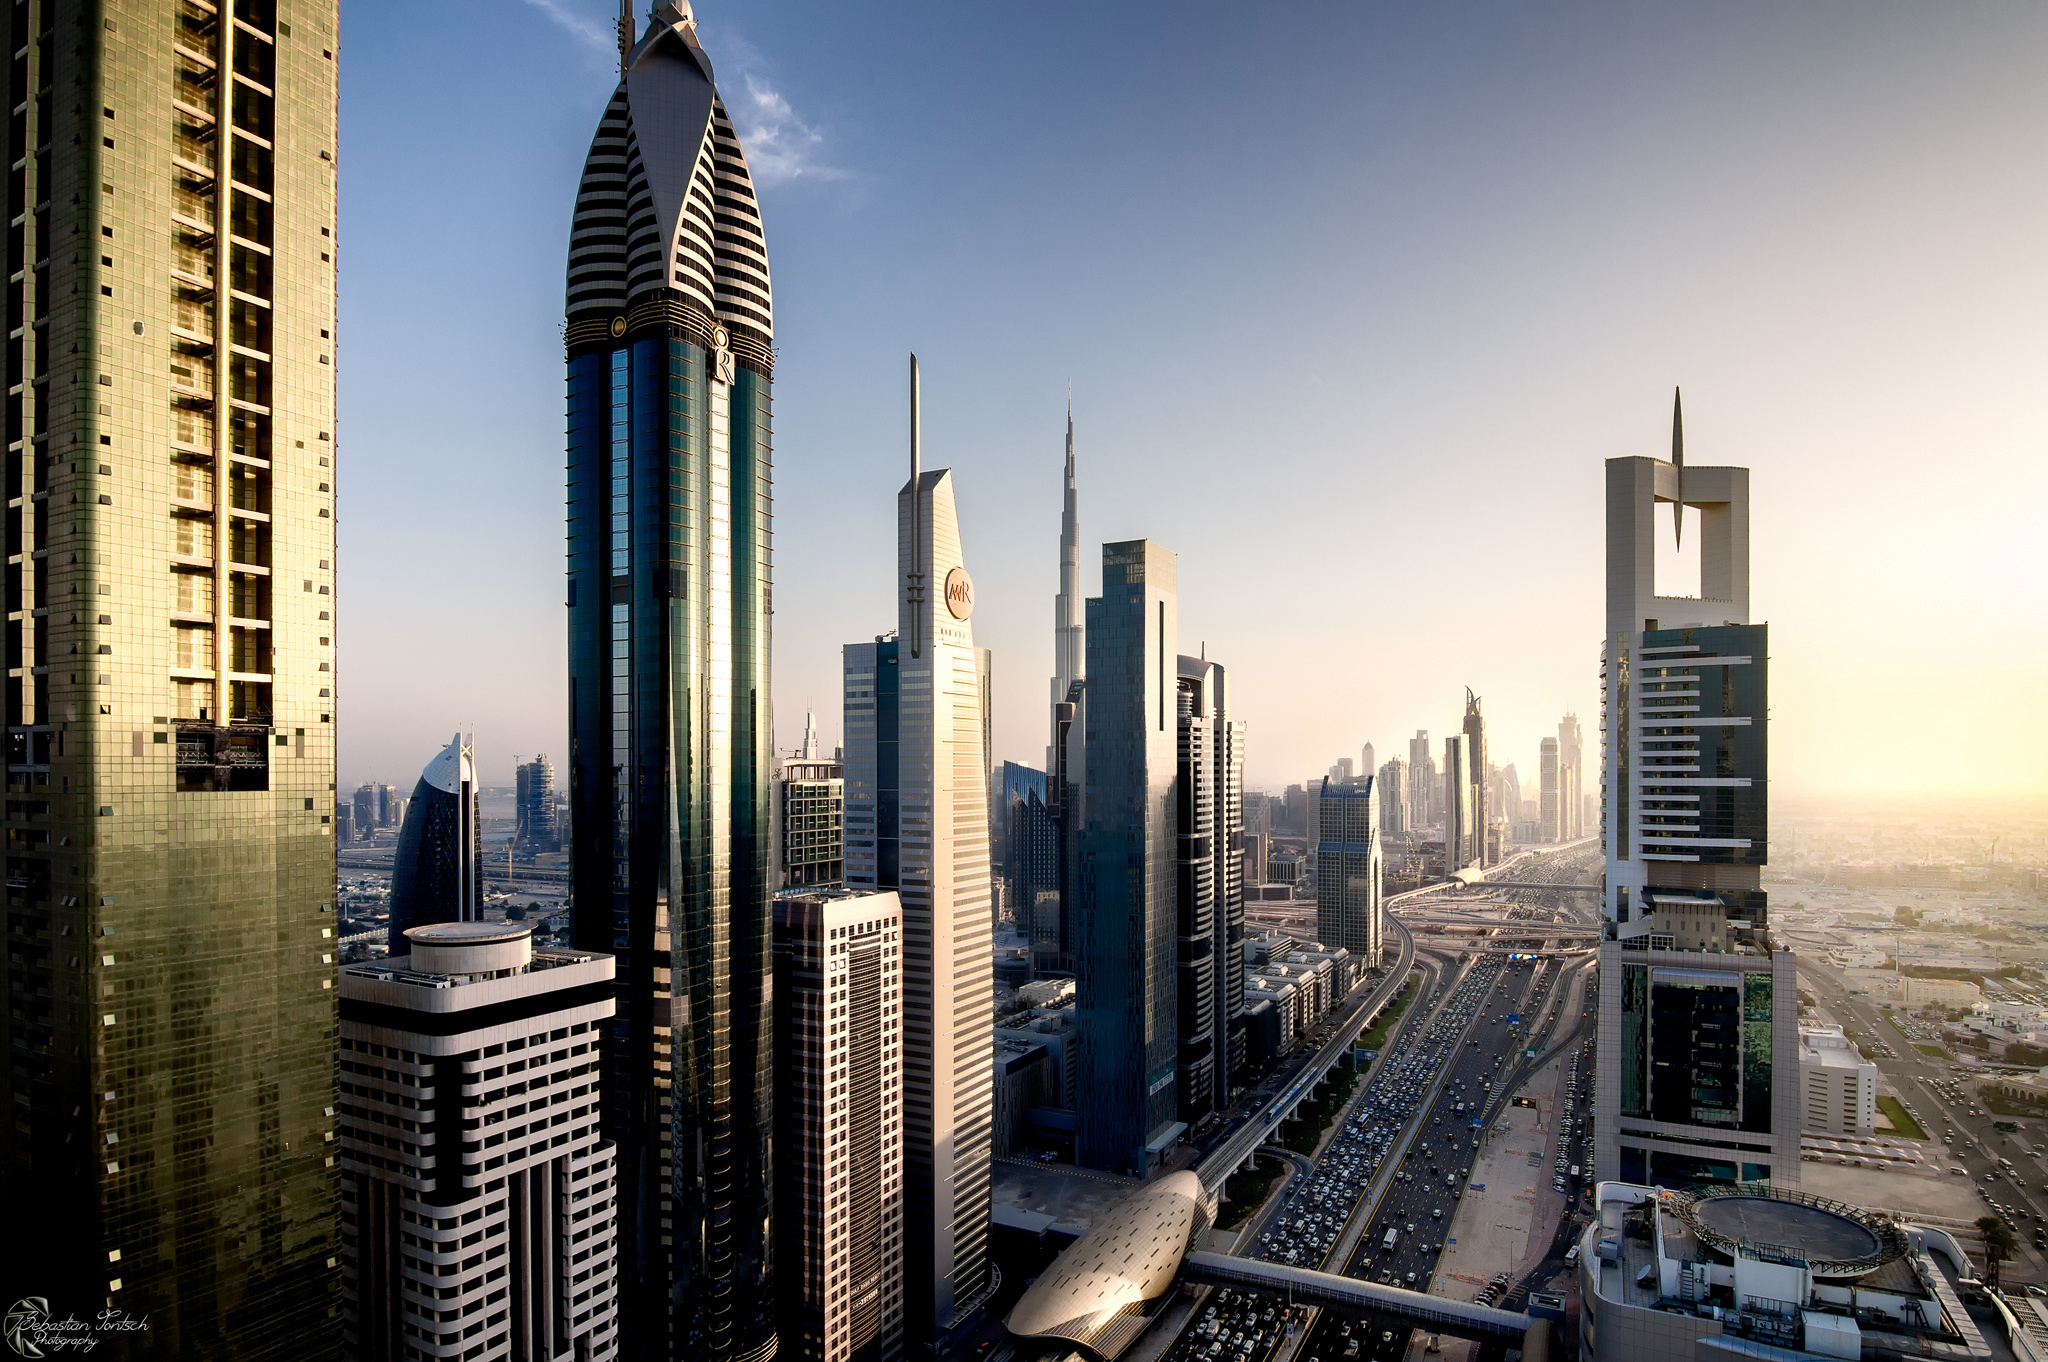 monorail, dubai, skyscraper, megapolis, traffic, rose tower, cityscape, man made, sheikh zayed avenue, united arab emirates, cities